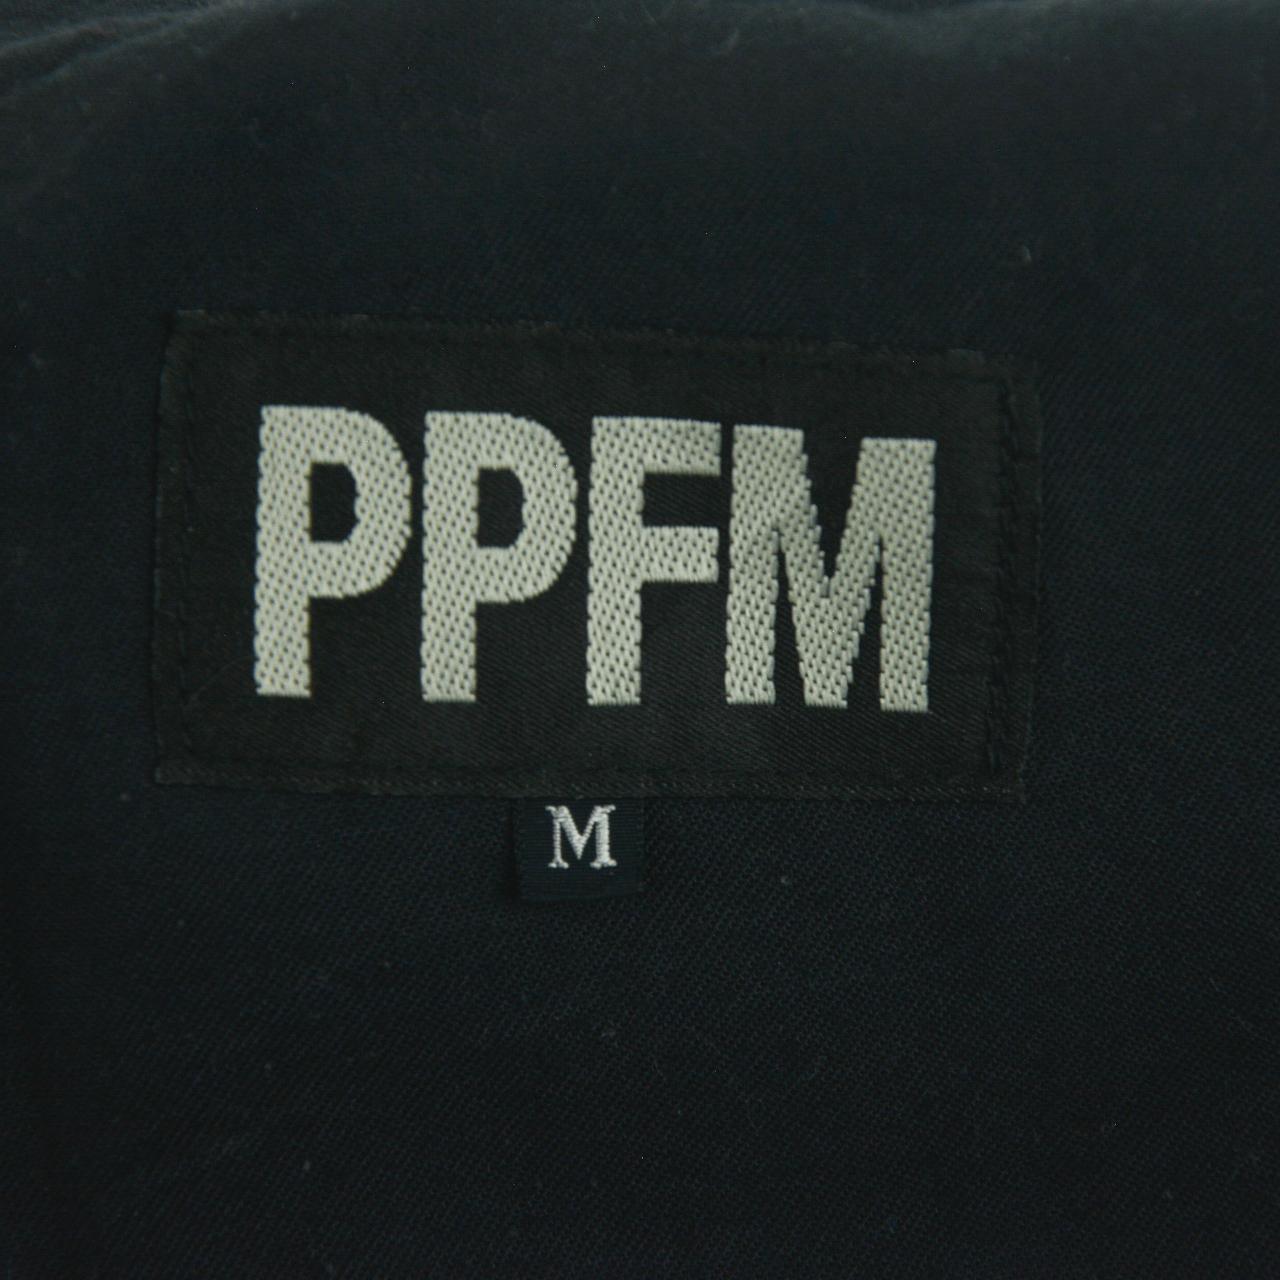 Vintage PPFM Check Trousers Size W30 - Known Source